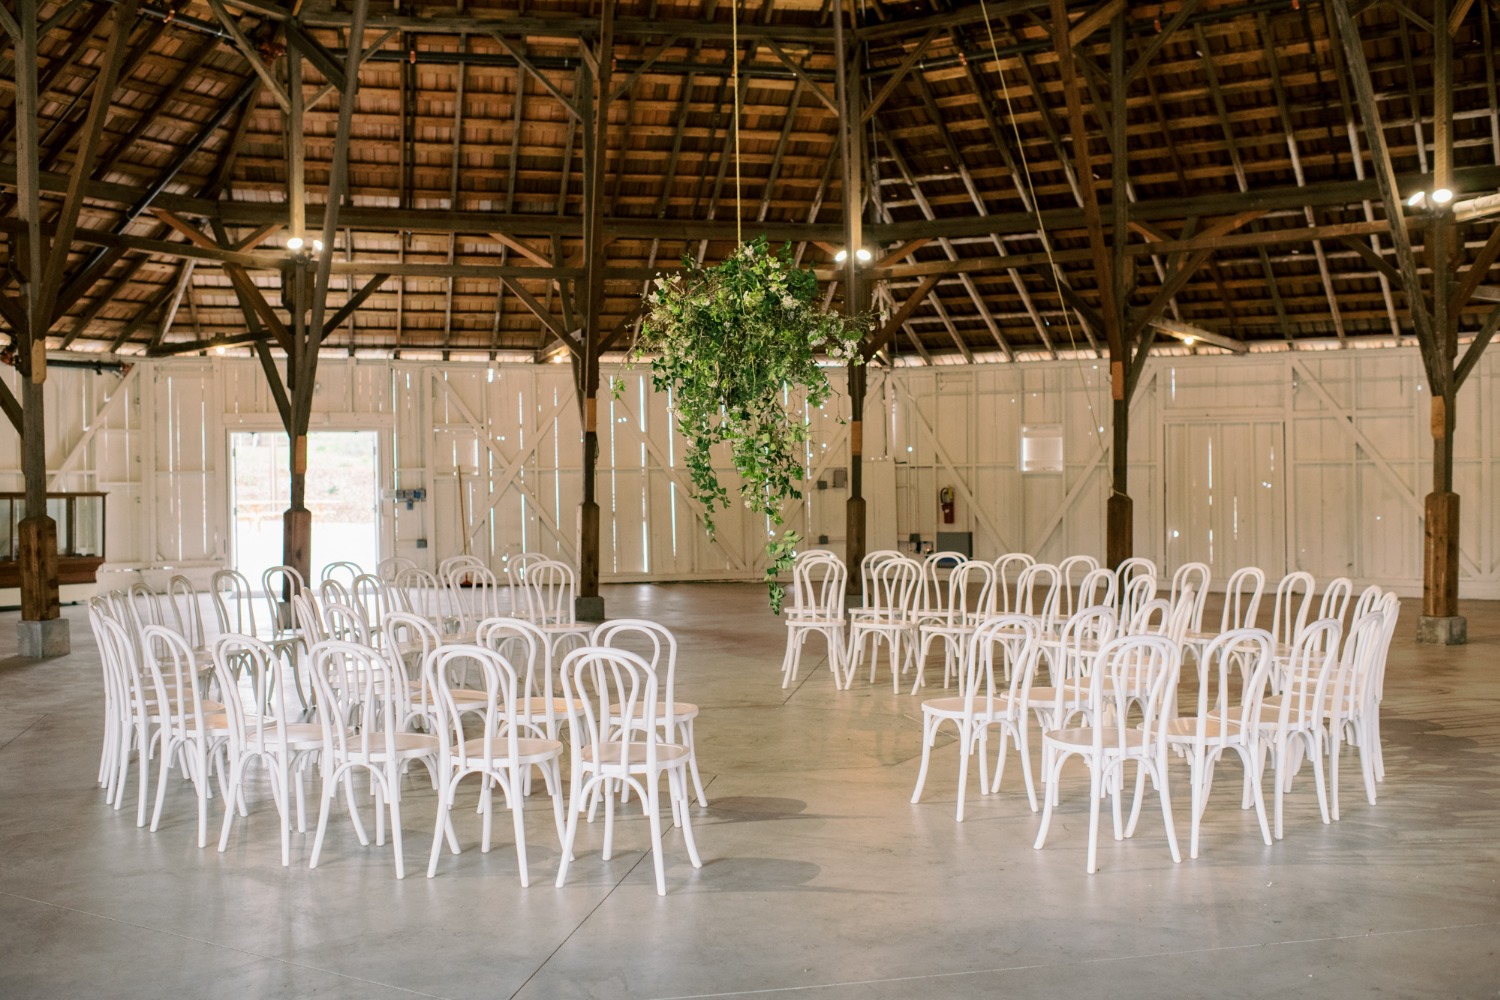 The Octagon Barn - A San Luis Obispo wedding venue